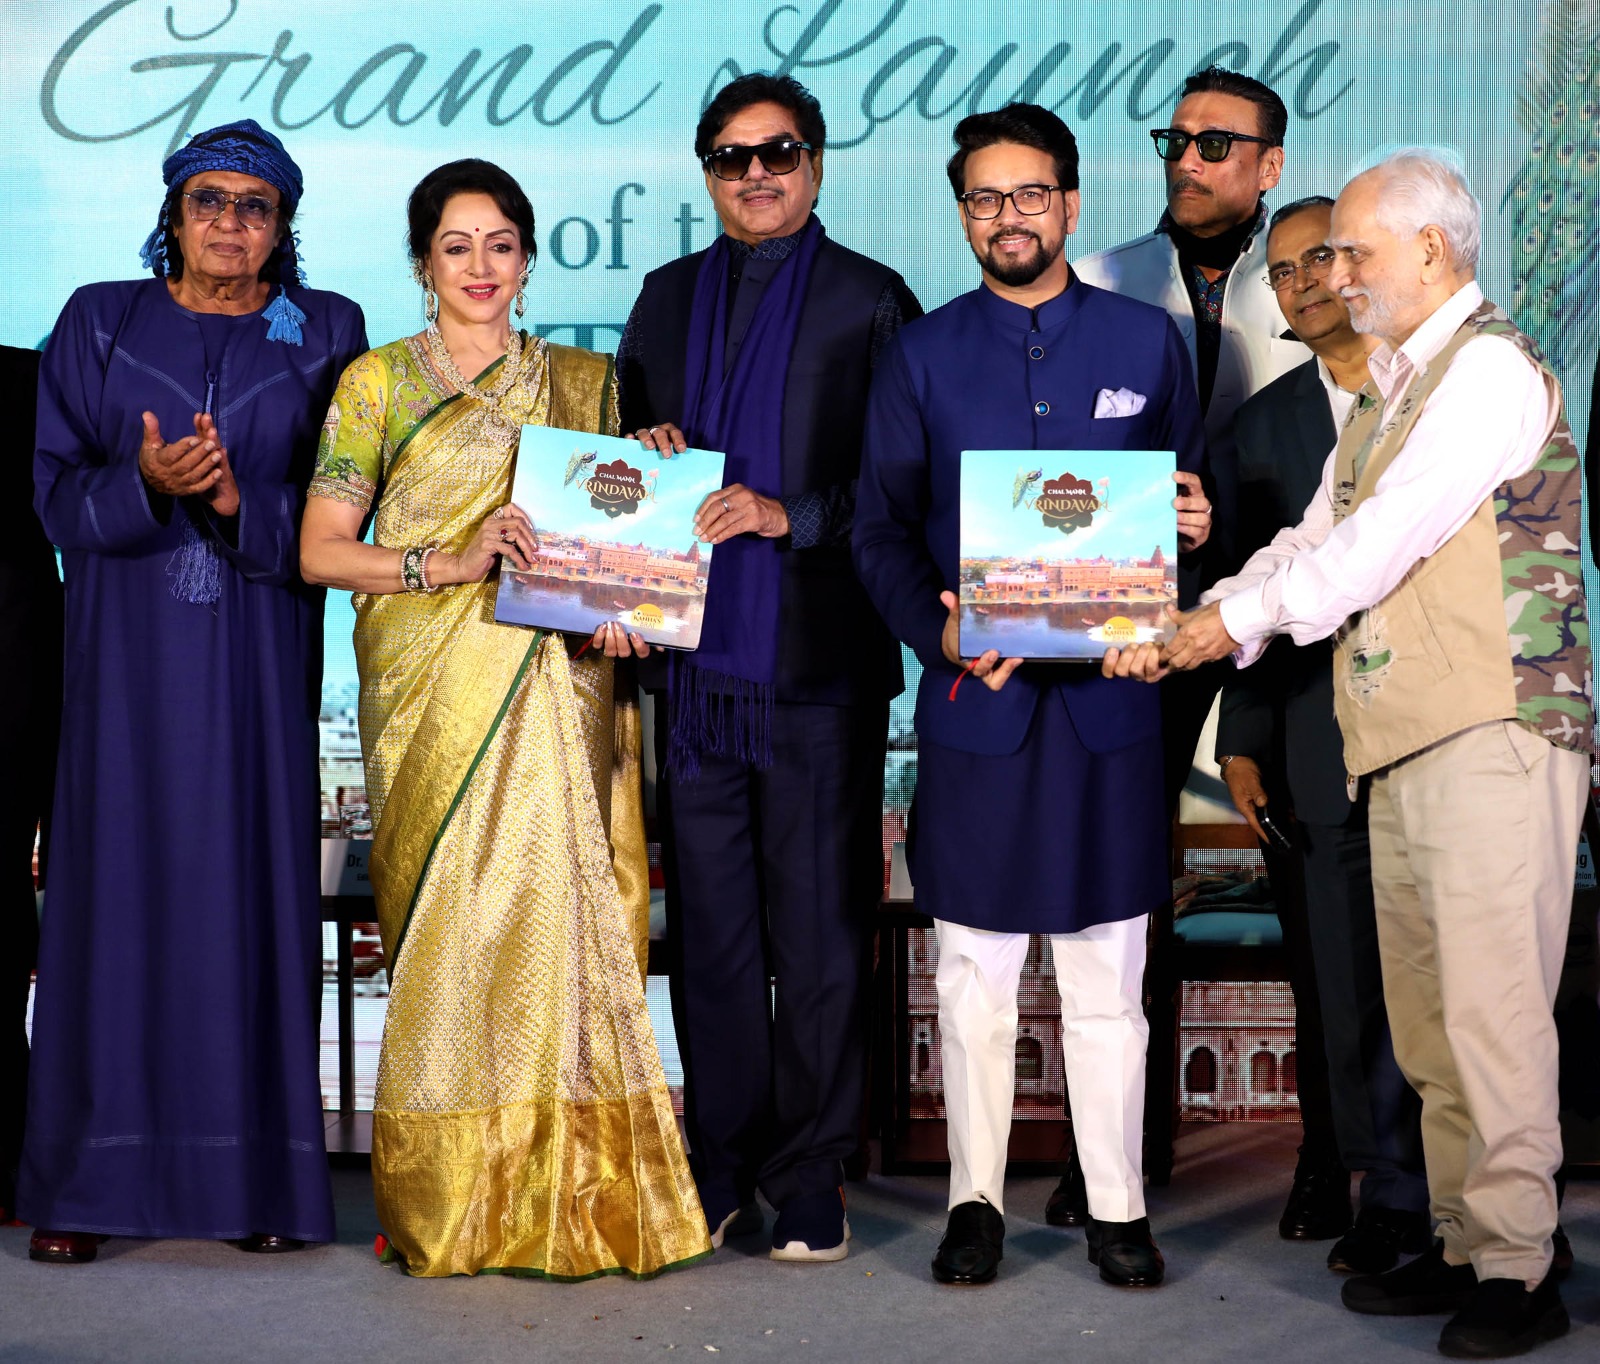 Launch of the book “Chal Mann Vrindavan” by Union Minister Anurag Singh Thakur, Hema Malini, Shatrughan Sinha, Jitendra, Jackie Shroff